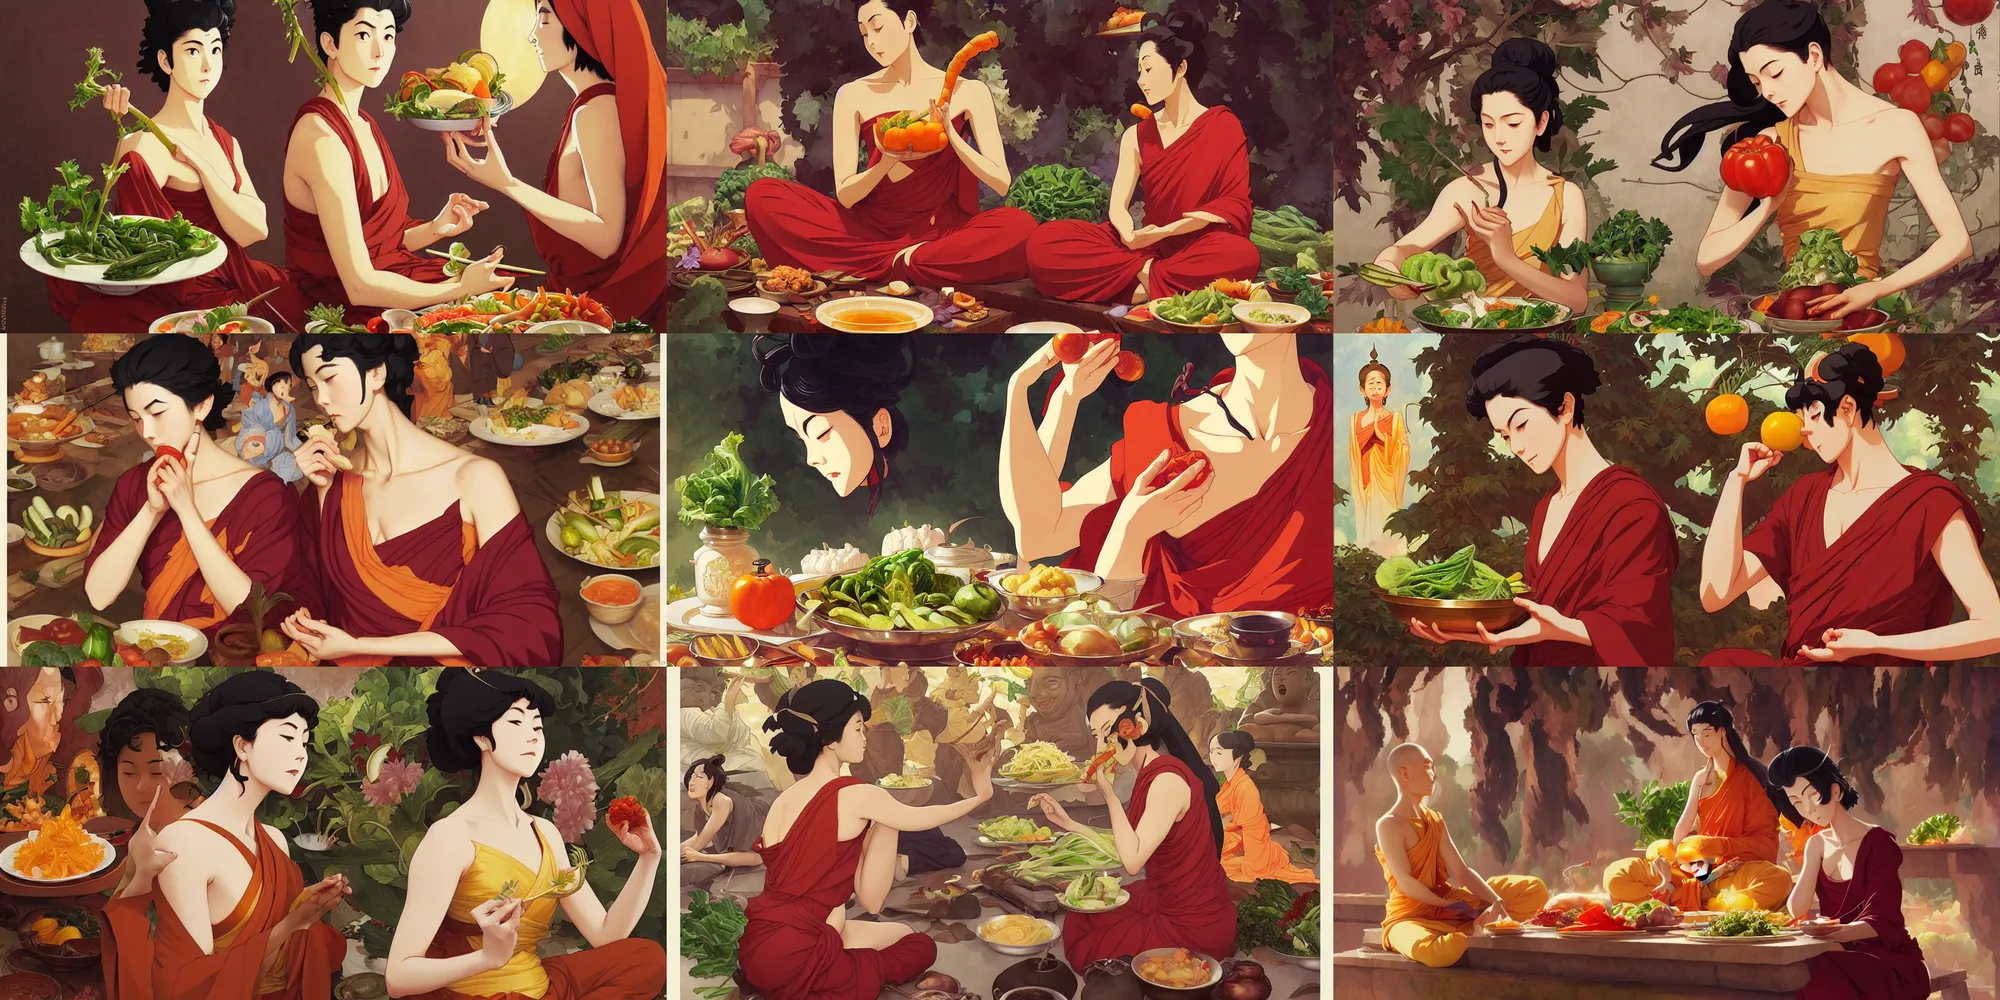 Prompt: buddhism, eating vegetable, in the style of studio ghibli, j. c. leyendecker, greg rutkowski, artgerm